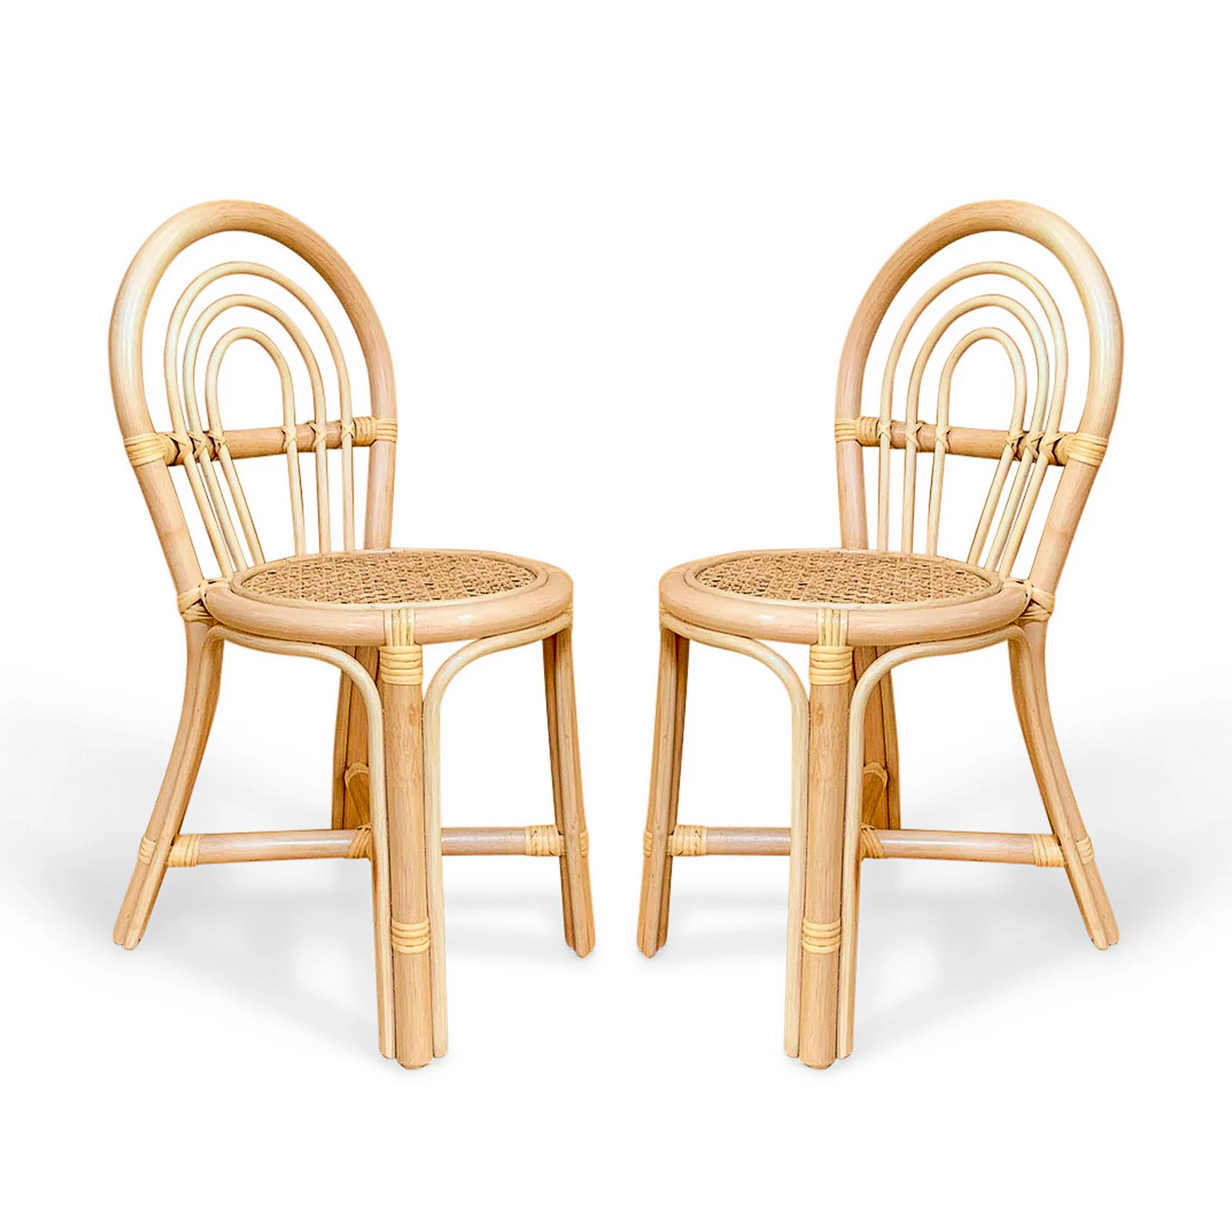 Poppie Rainbow Chairs - Set of 2